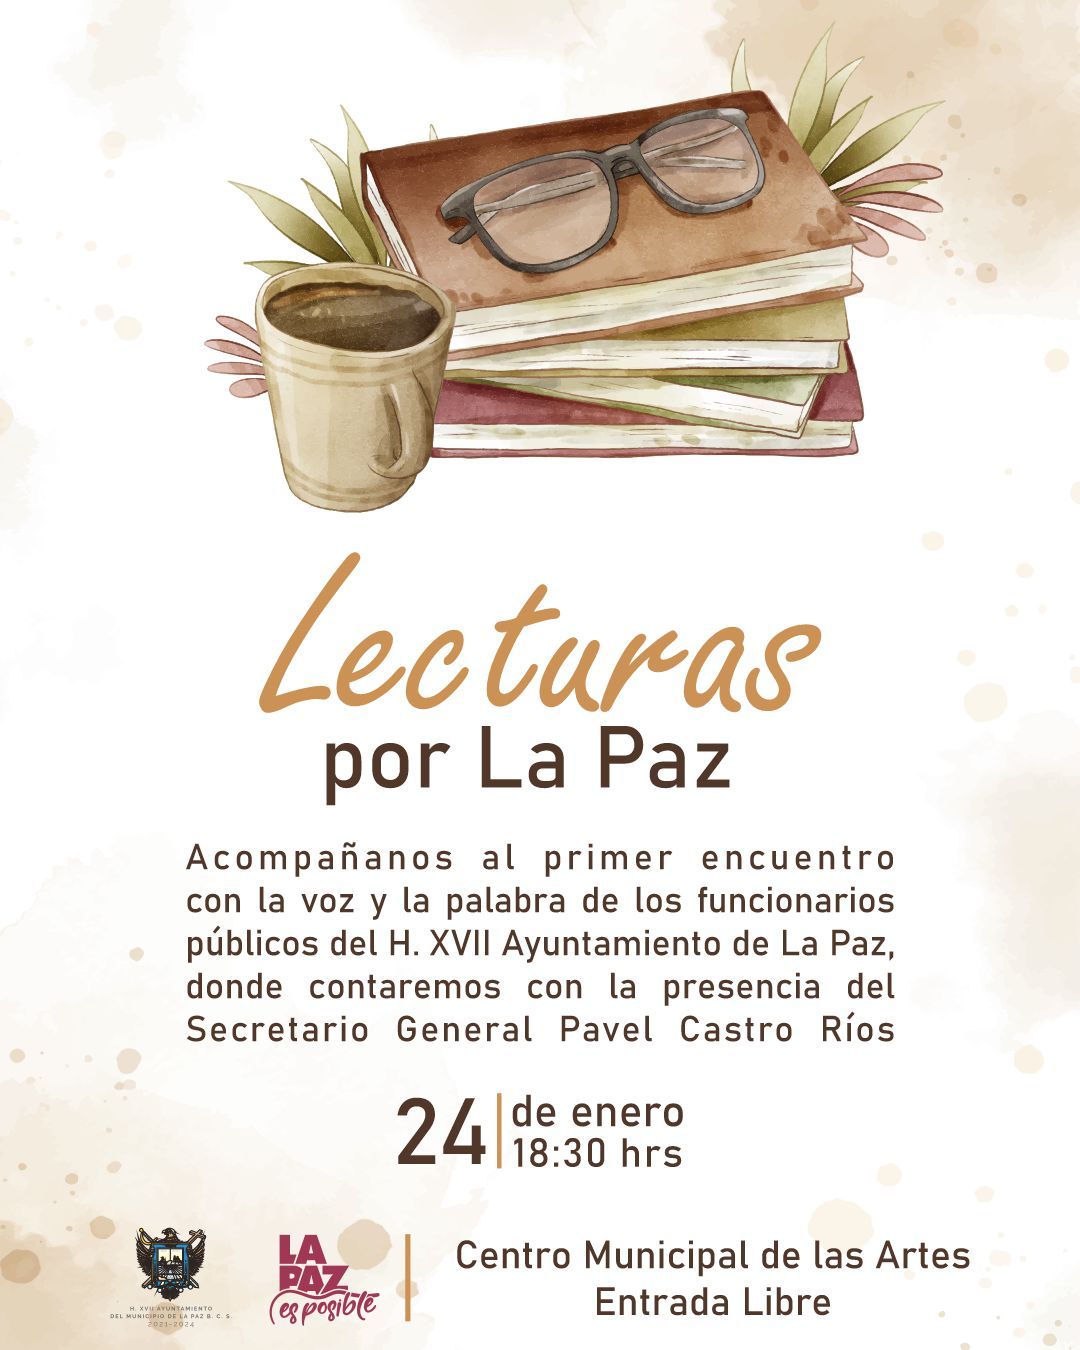 Invitan al primer encuentro literario “Lecturas por La Paz”